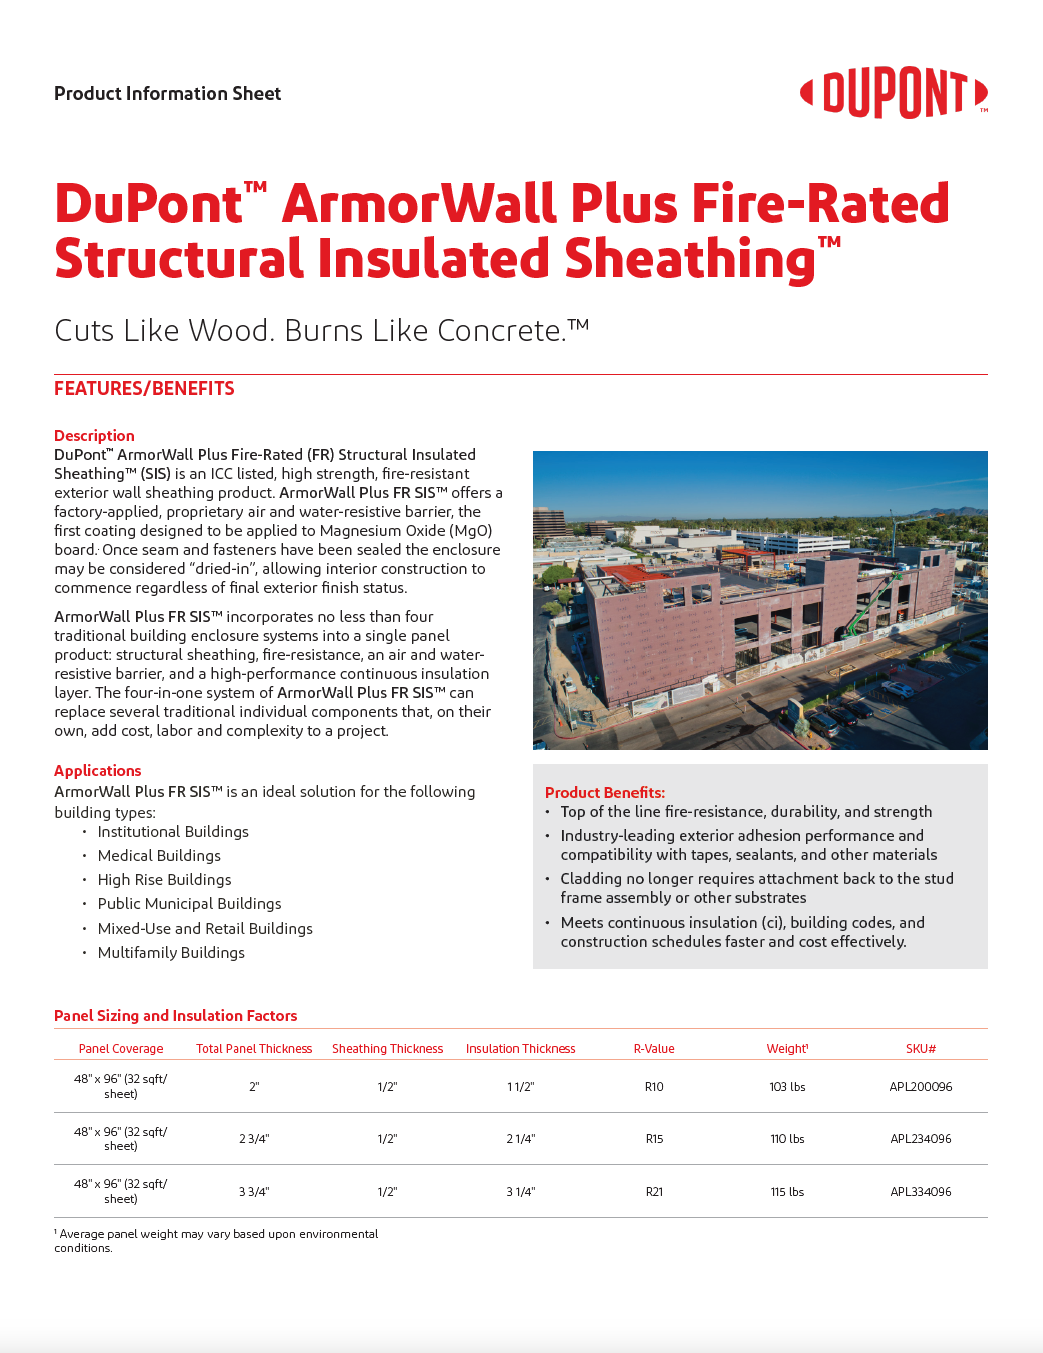 ArmorWall Plus FR SIS Product Information Sheet